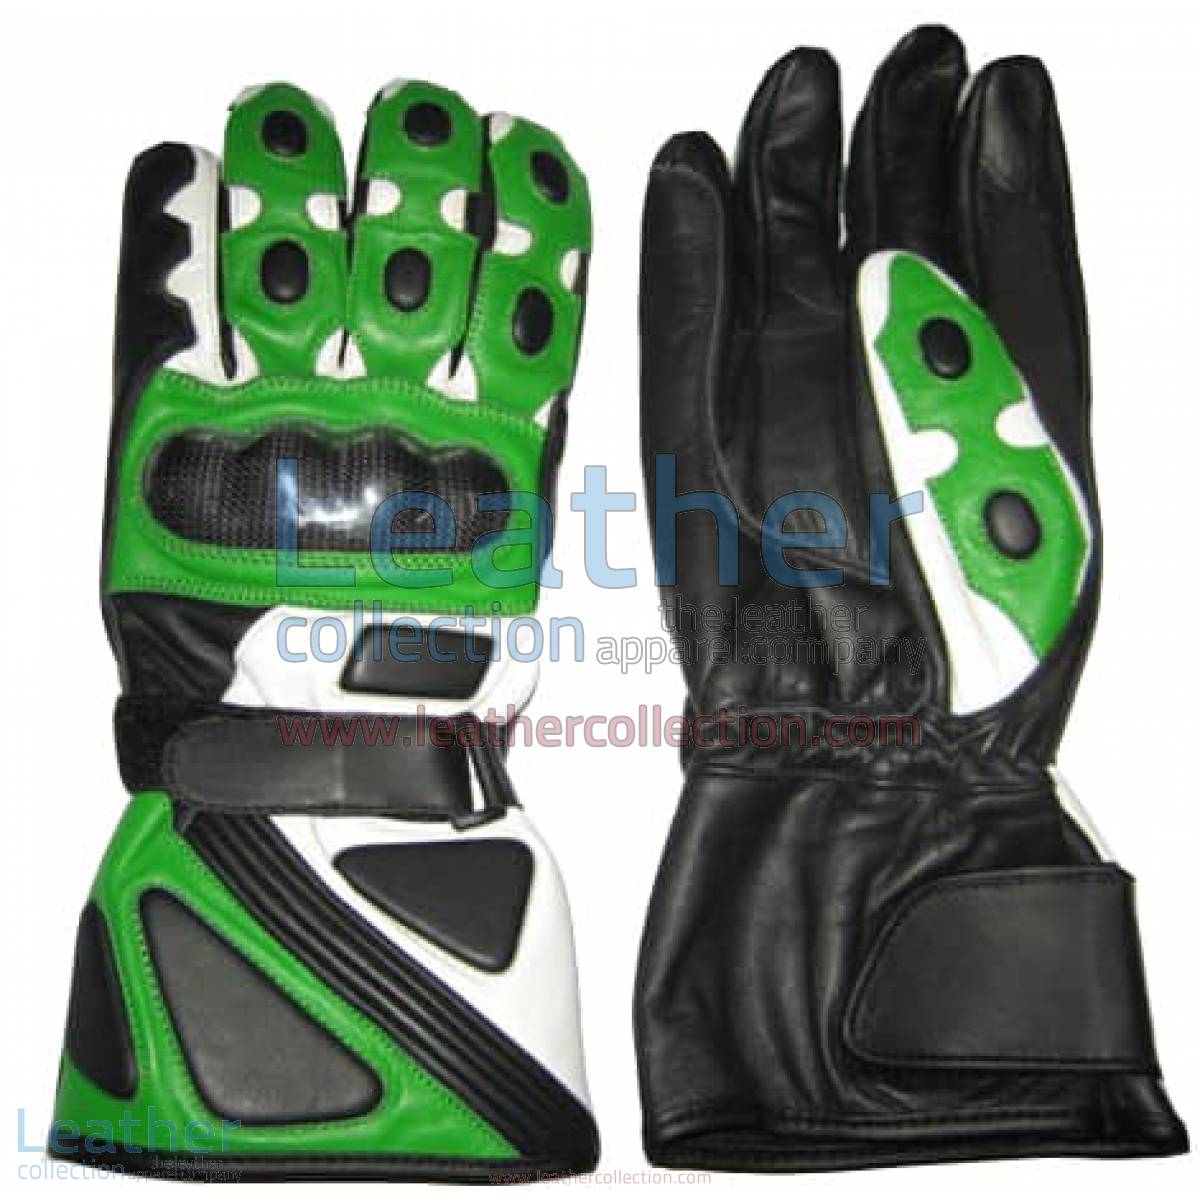 Bravo Green Motorcycle Race Gloves | race gloves,motorcycle race gloves